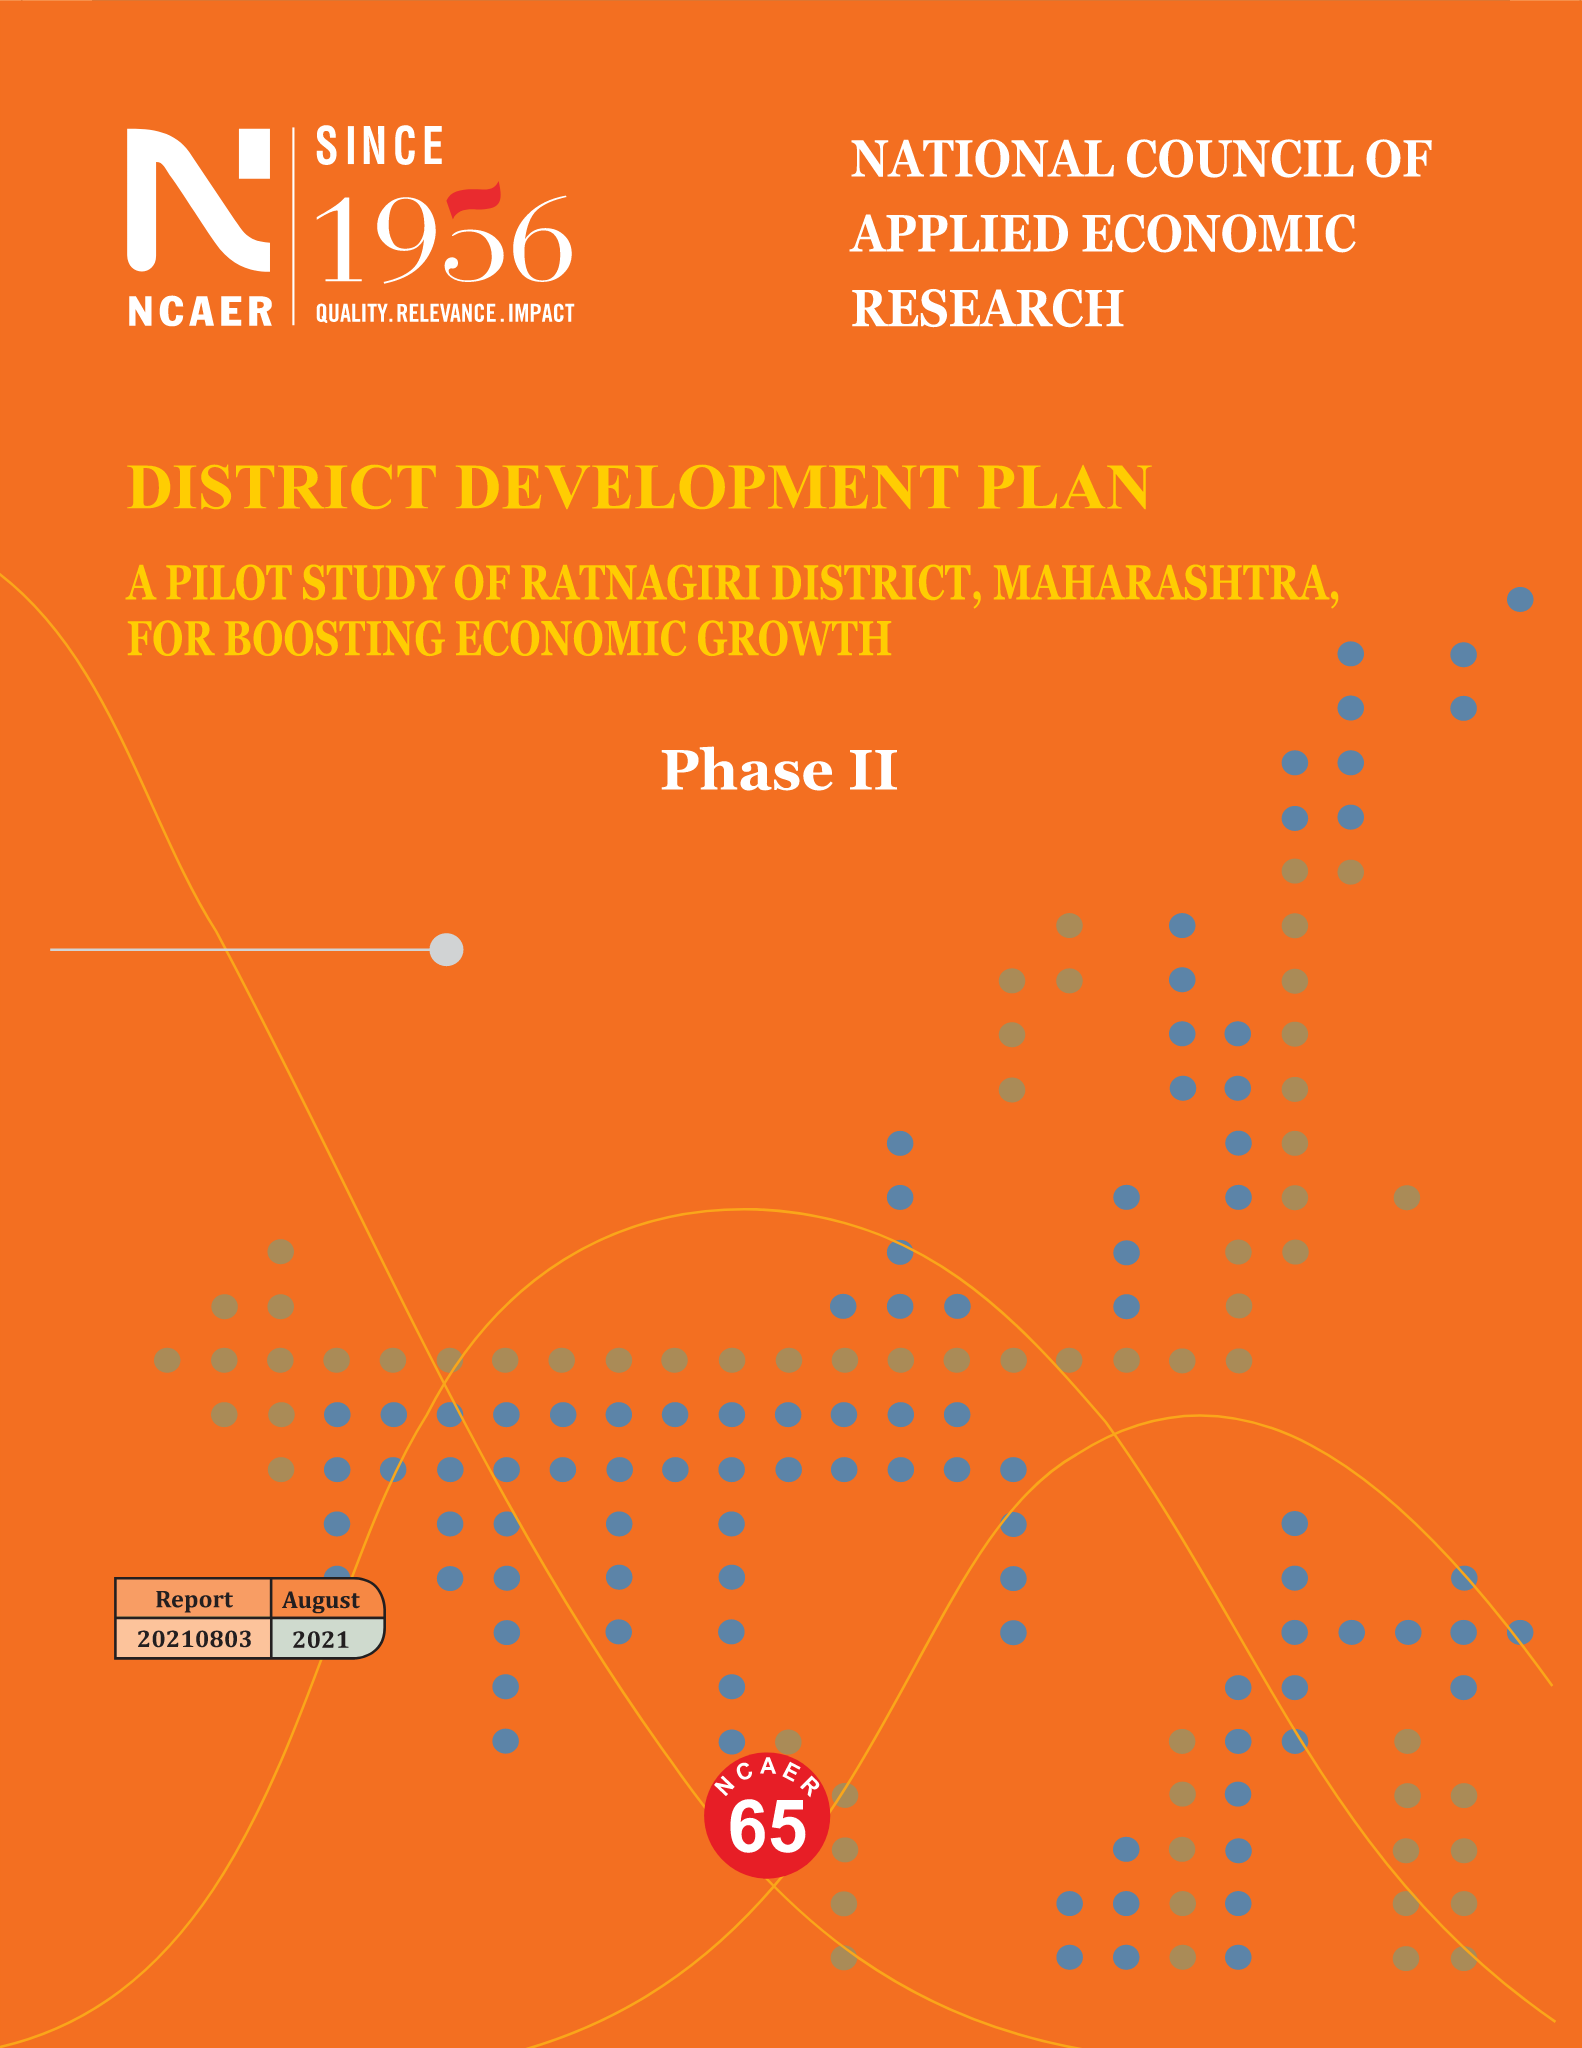 A pilot study of Ratnagiri district of Maharashtra, for boosting economic growth